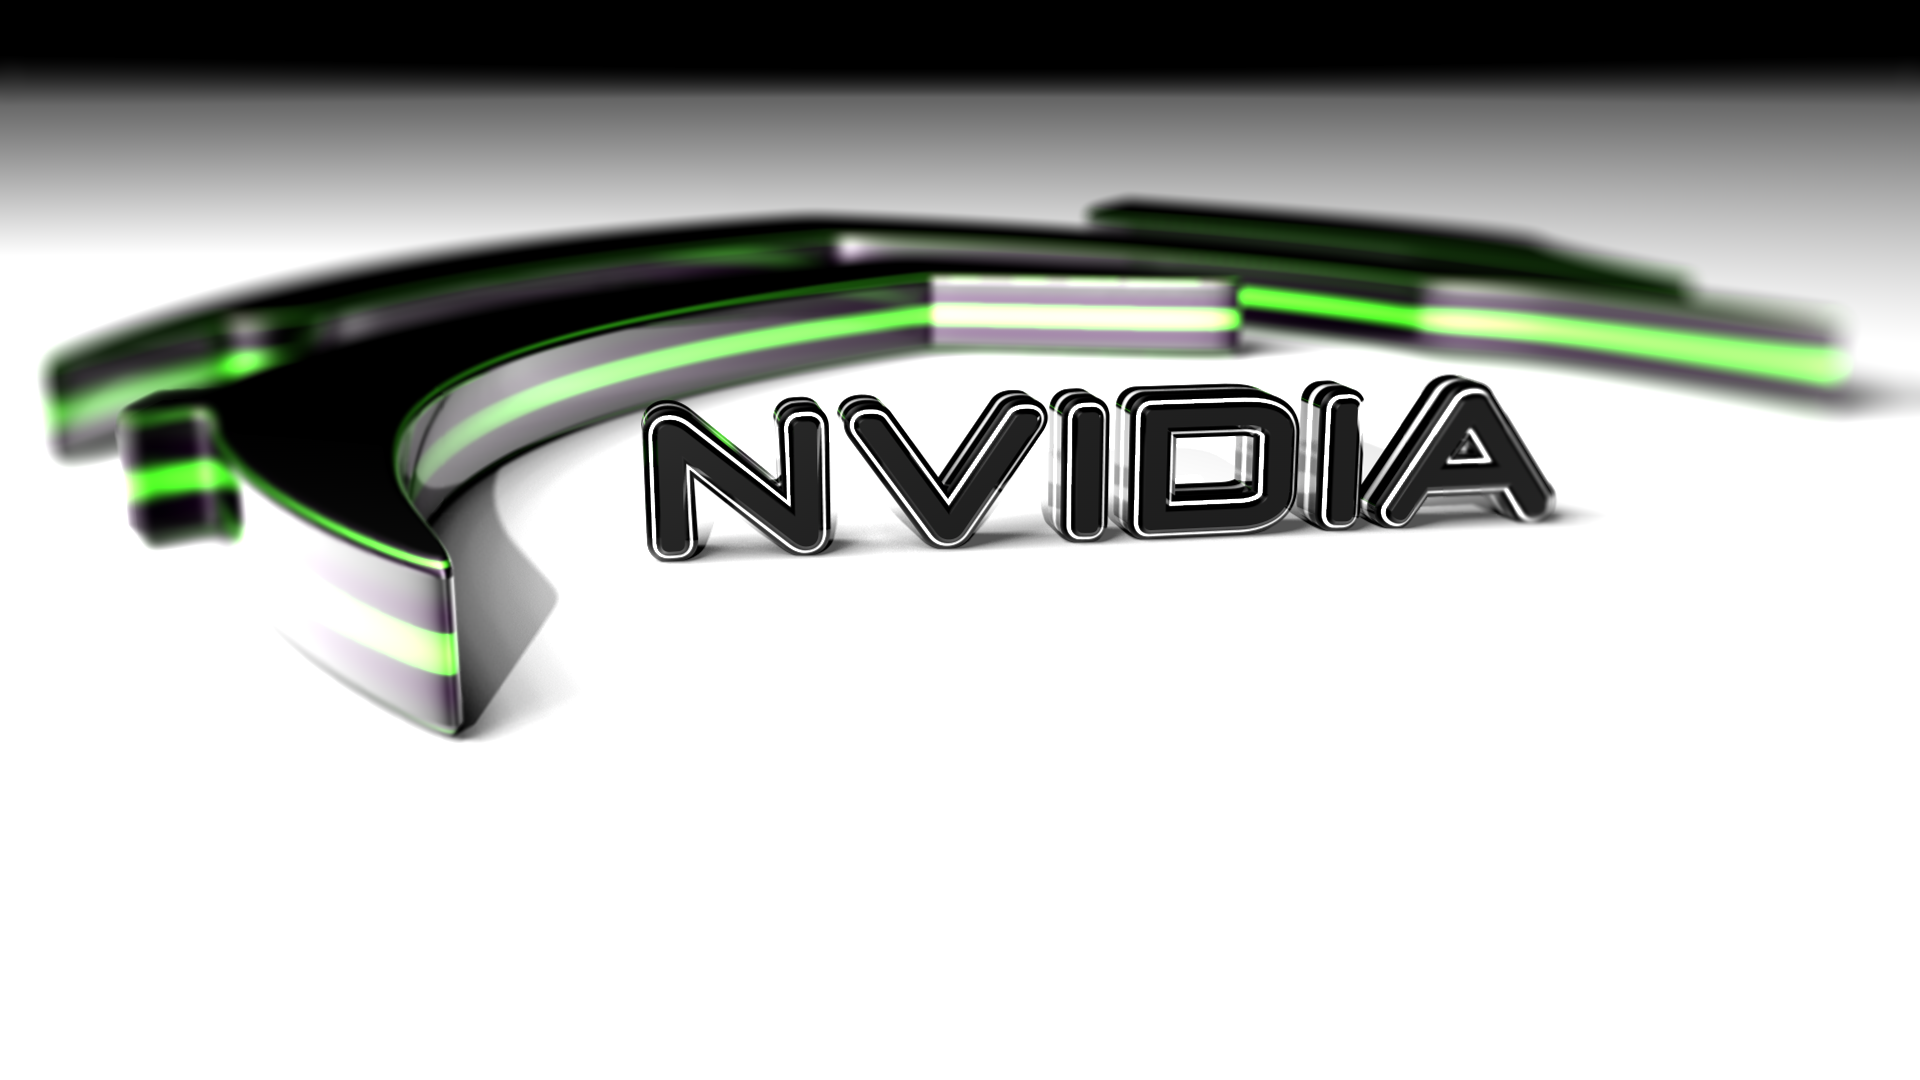 General 1920x1080 Nvidia white background logo digital art CGI